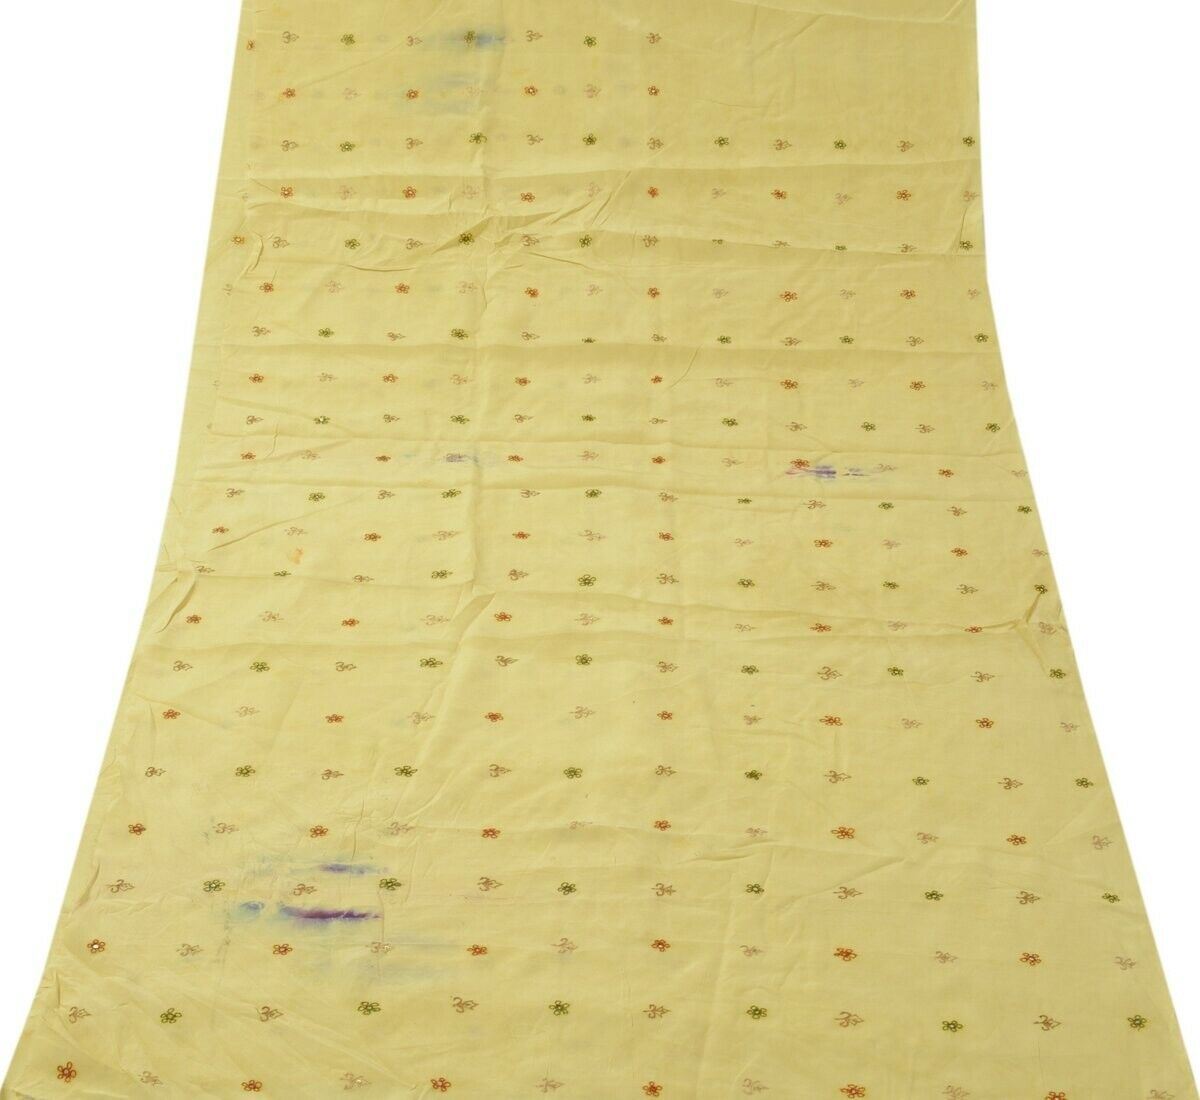 100% Pure Crepe Silk Cream Vintage Sari Remnant Scrap Fabric for Sewing Craft